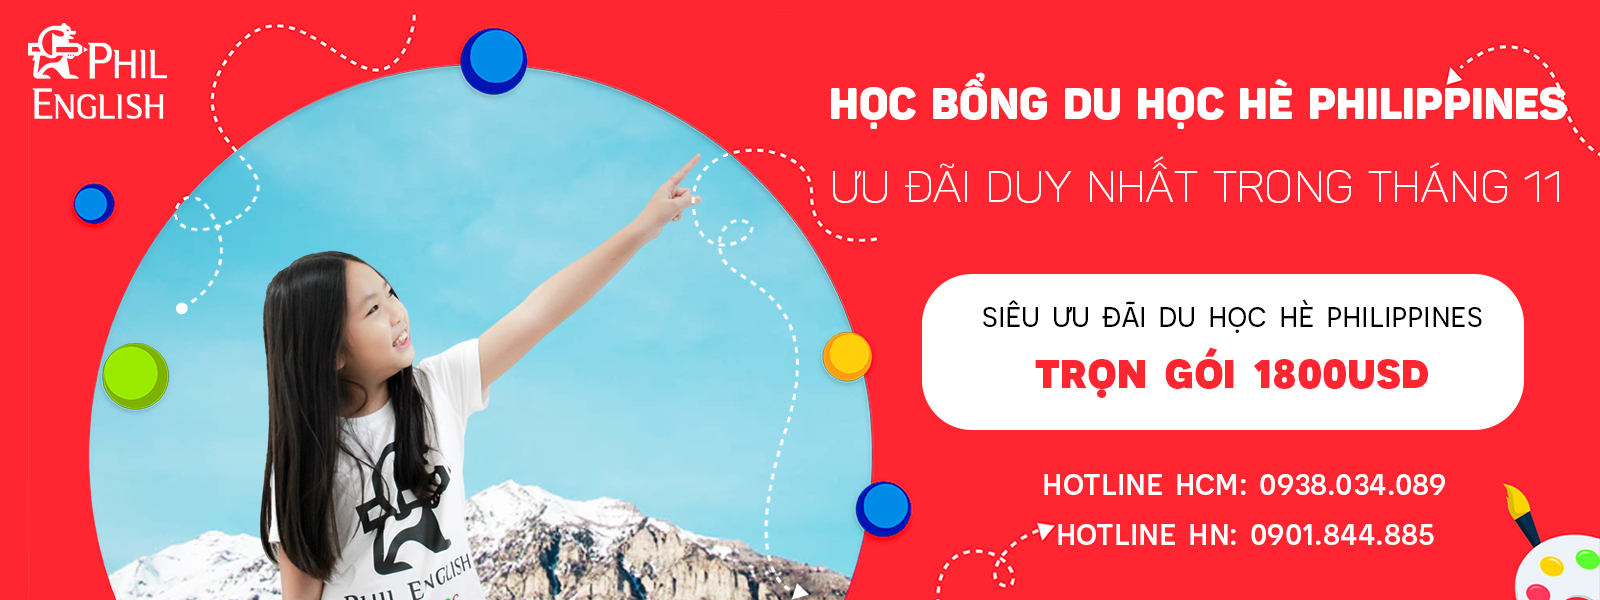 hoc-bong-tron-goi-du-hoc-he-2019-1800